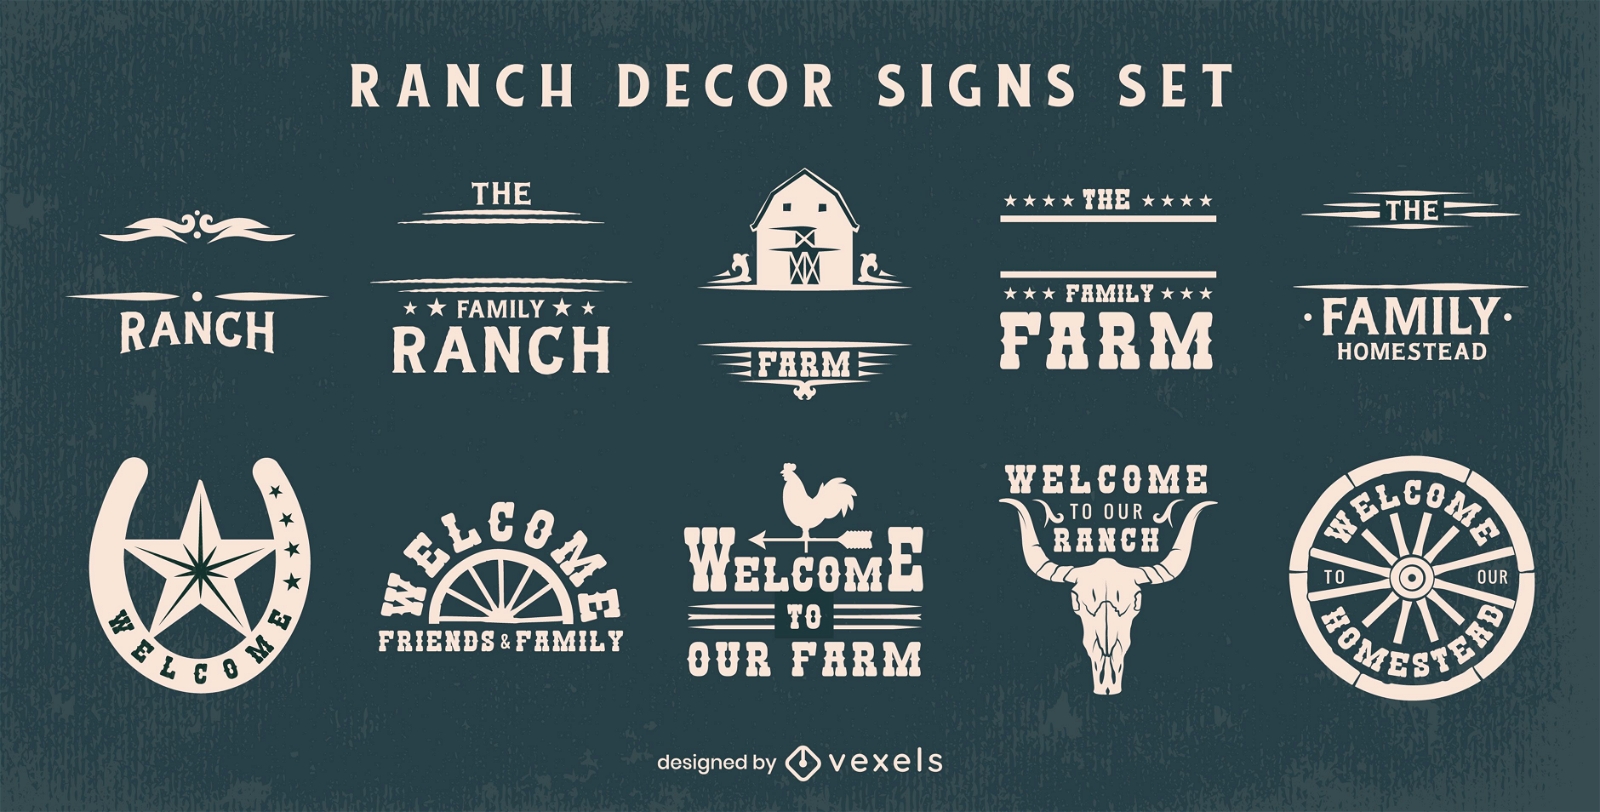 Ranch farm decor set of signs